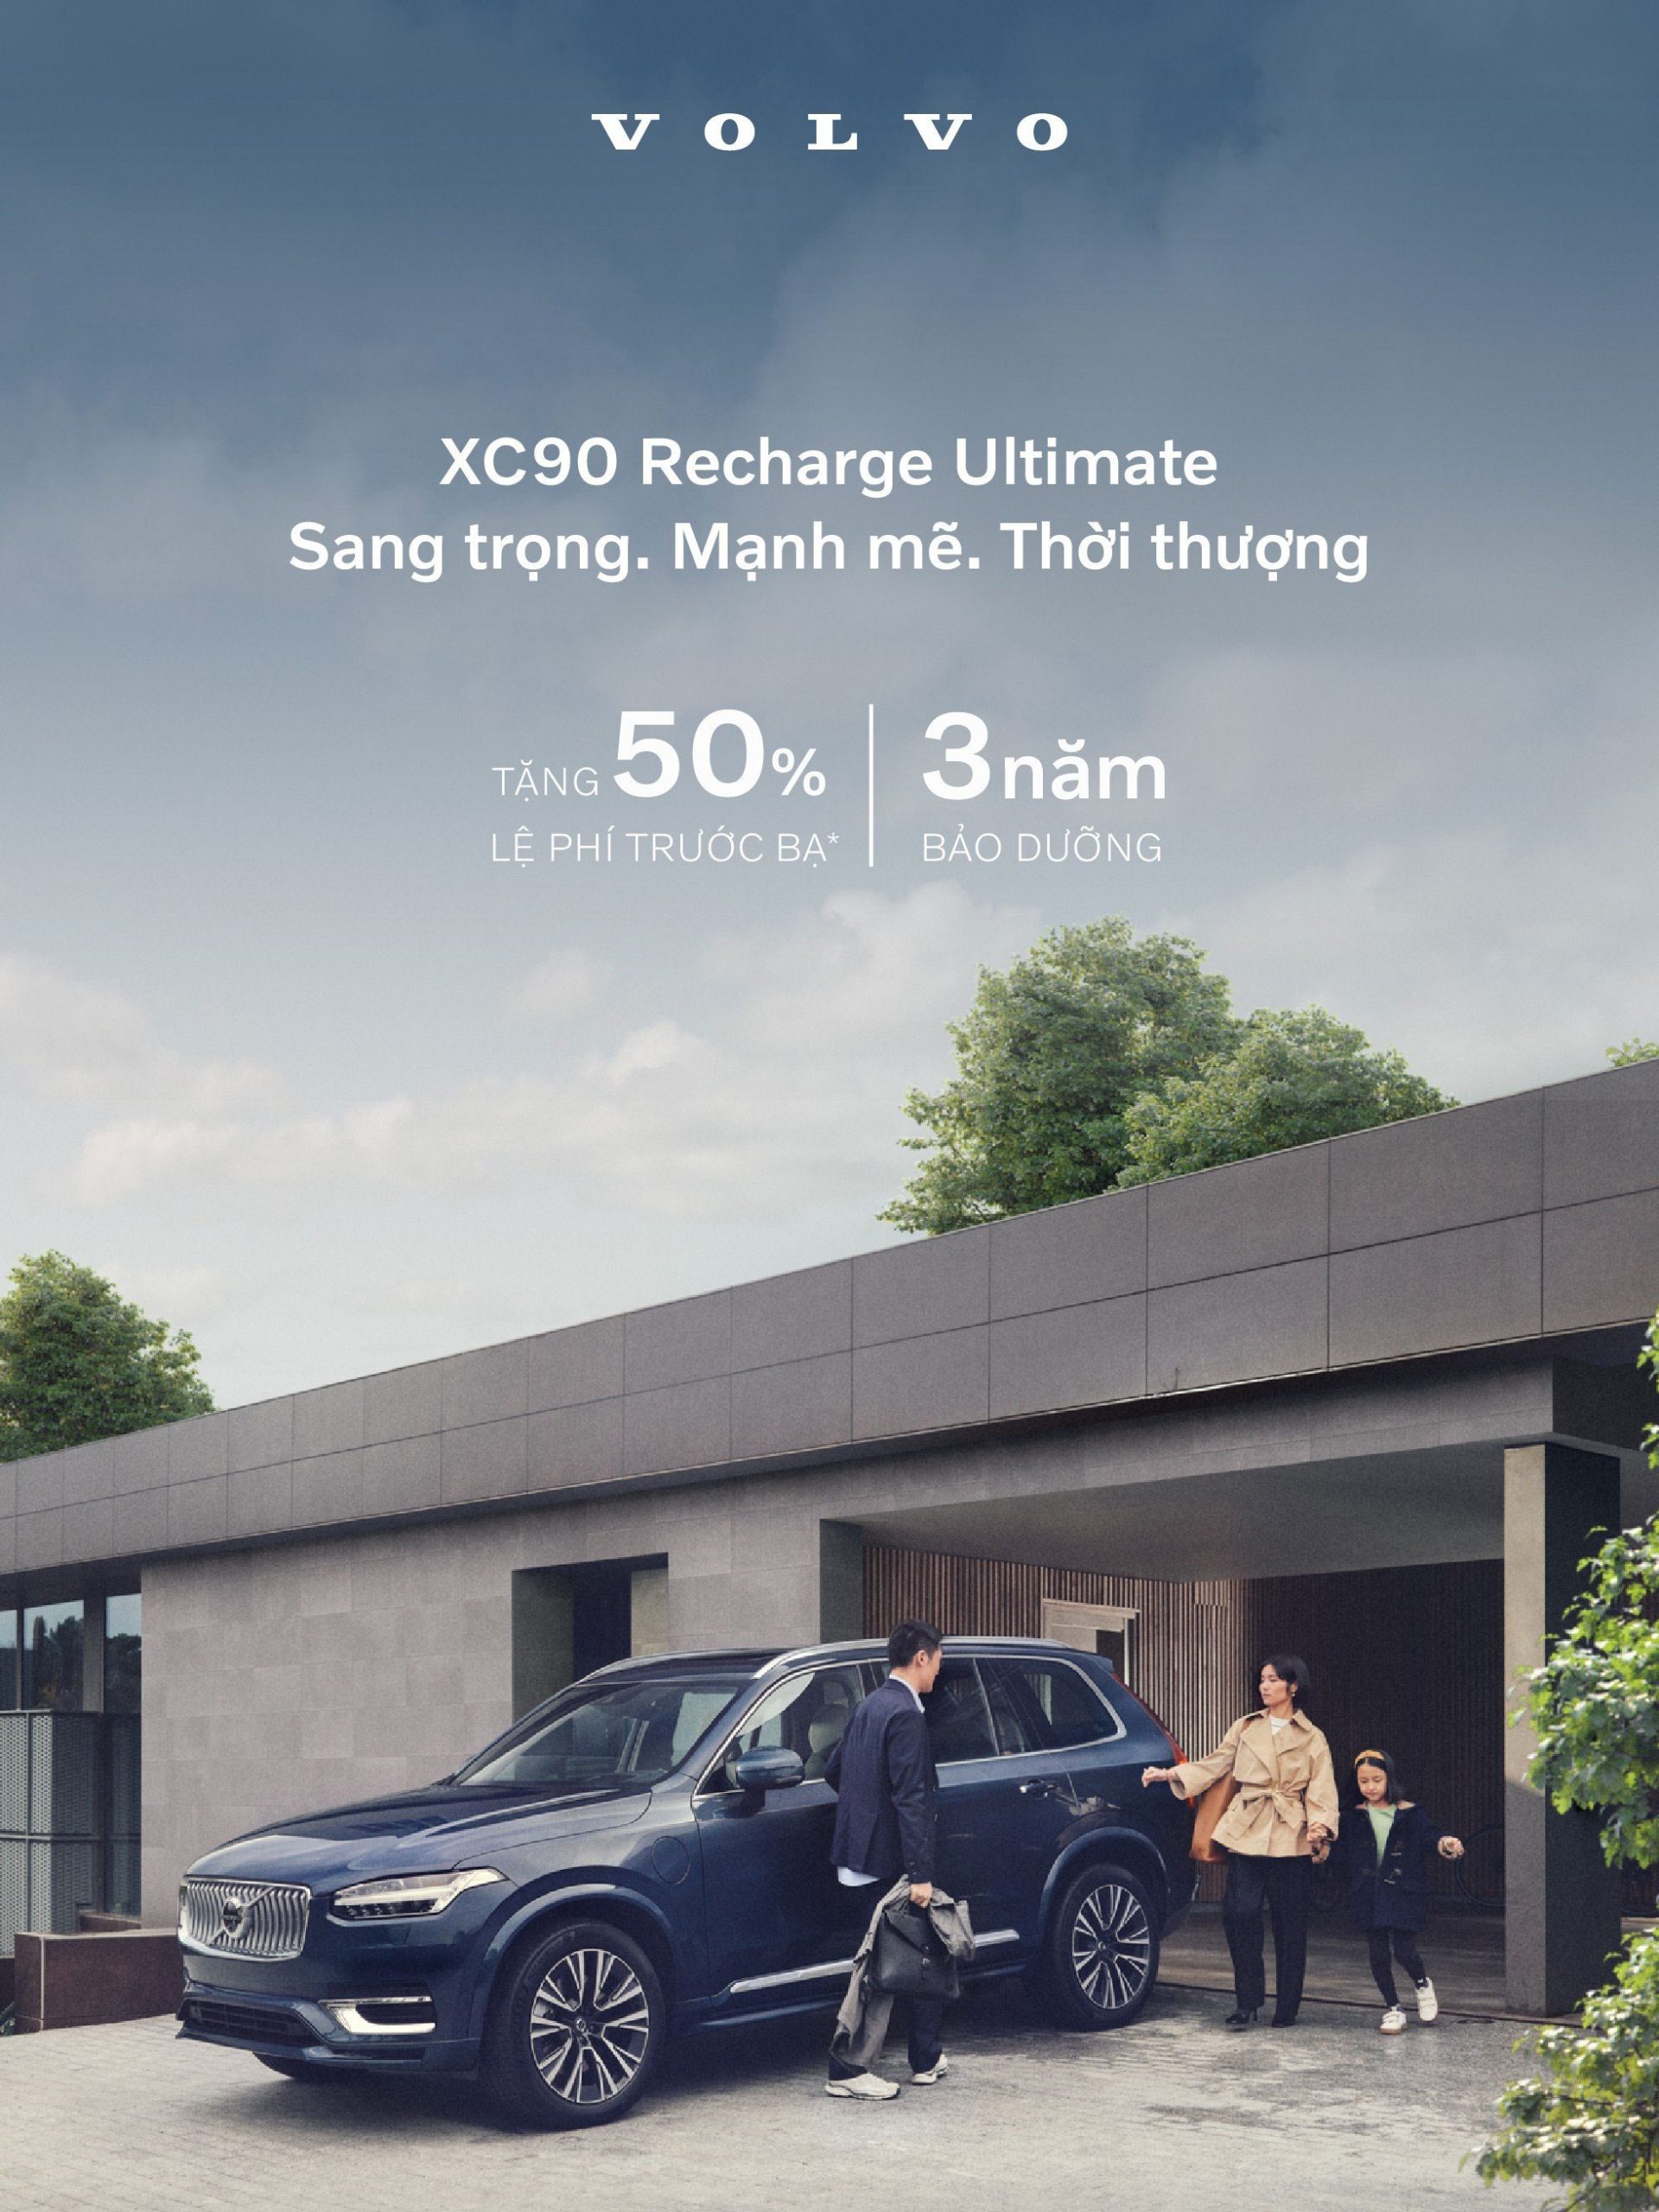 Volvo XC90 Recharge Ultimate